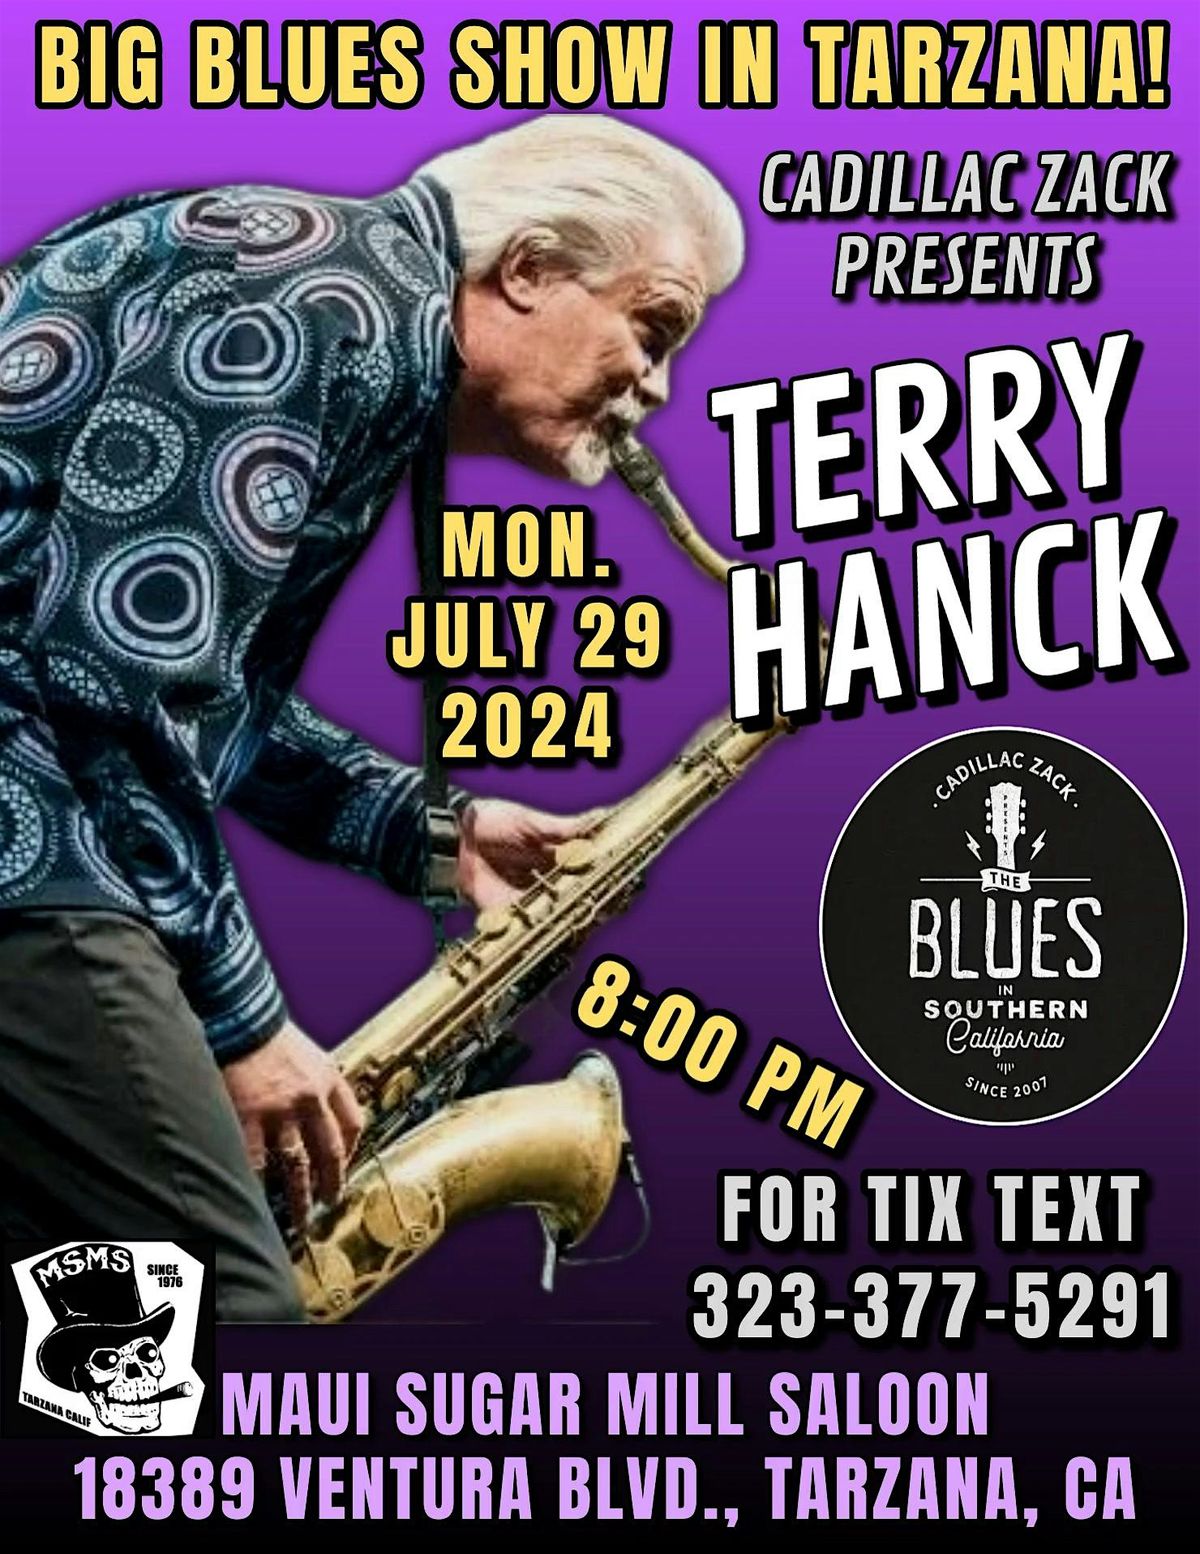 TERRY HANCK - Blues Saxophone Legend - in Tarzana!